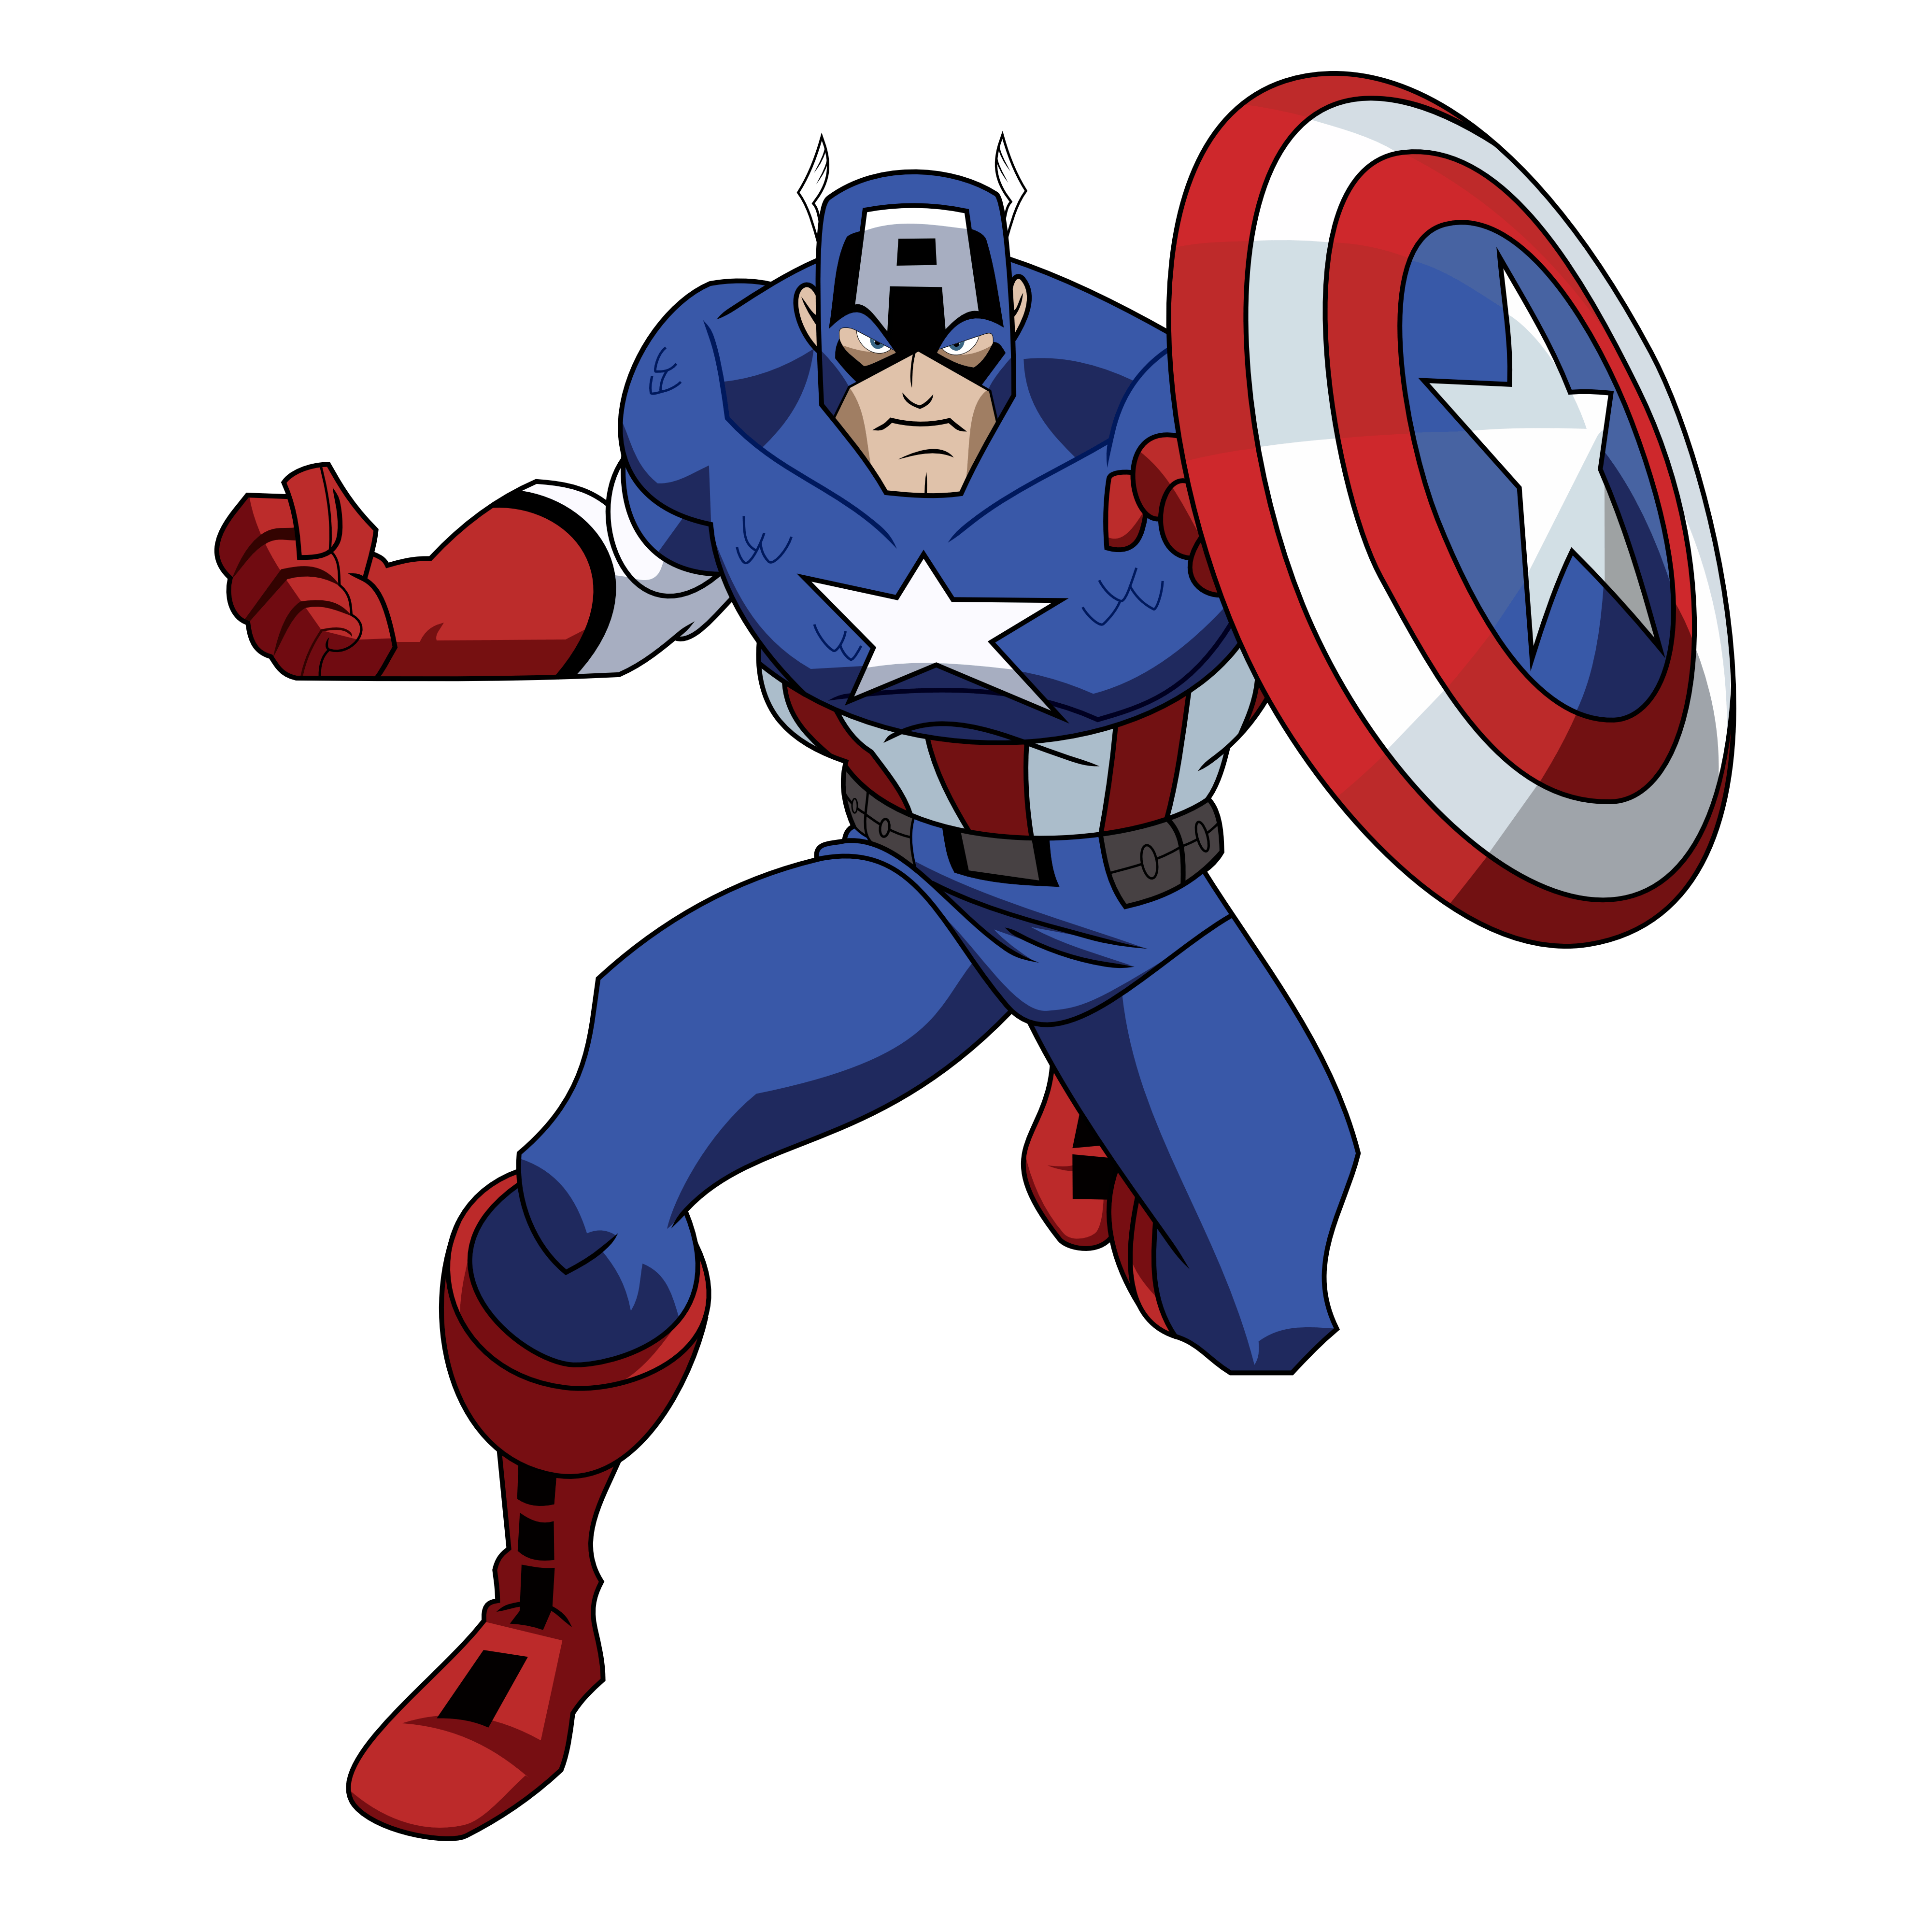 Captain America Cartoon Wallpapers - Wallpaper Cave